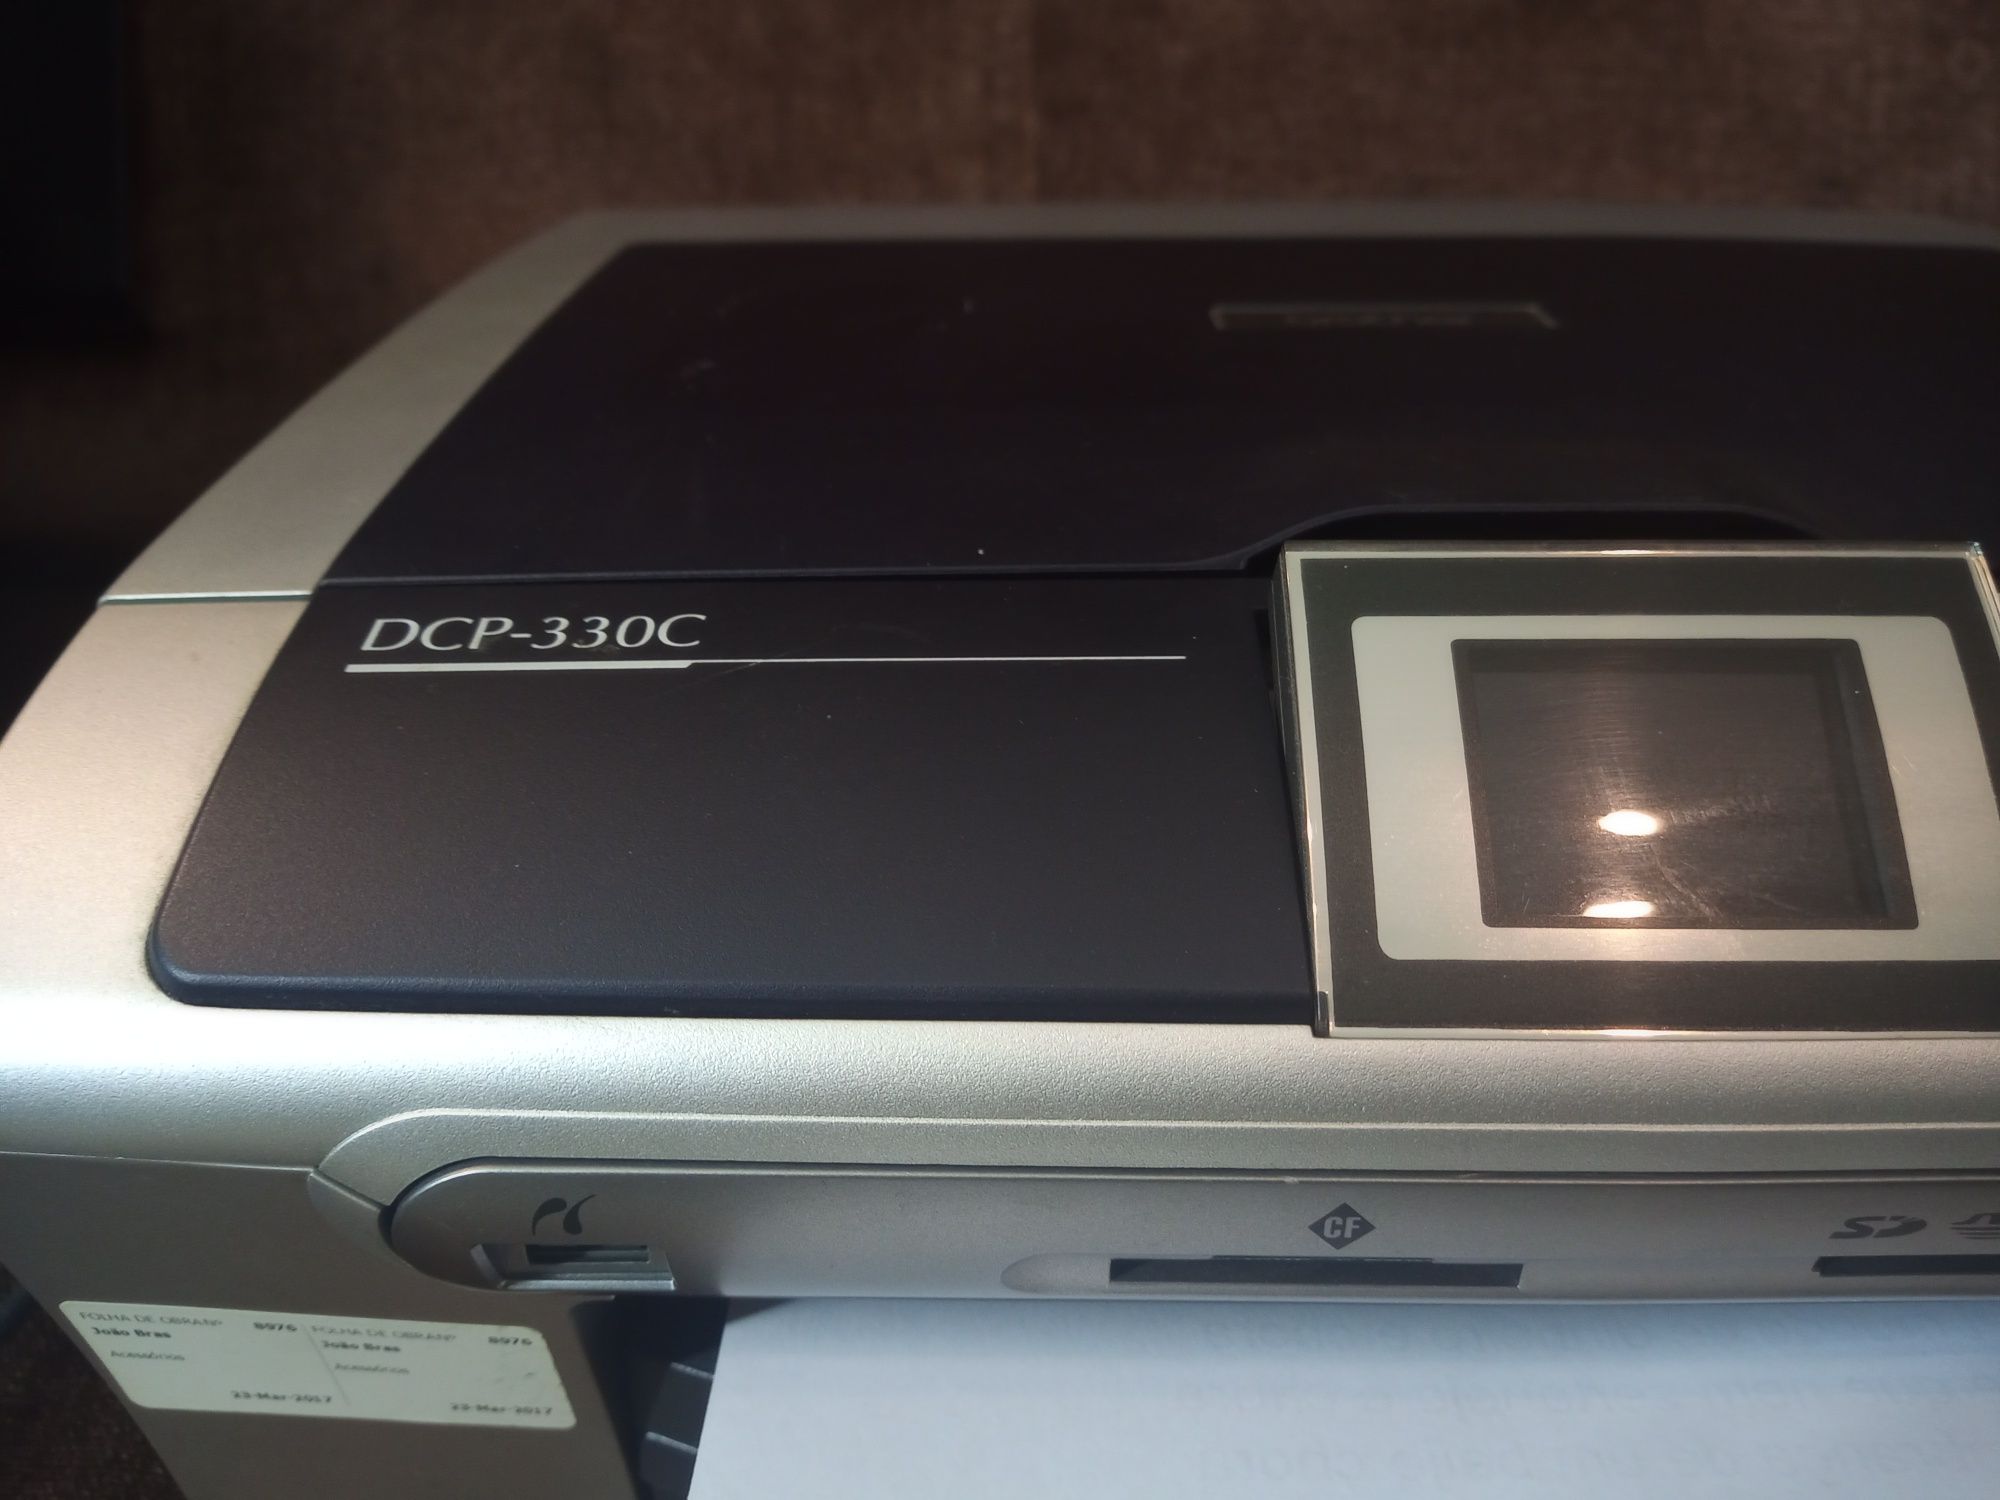 Impressora multifuncional Brother DCP-330C